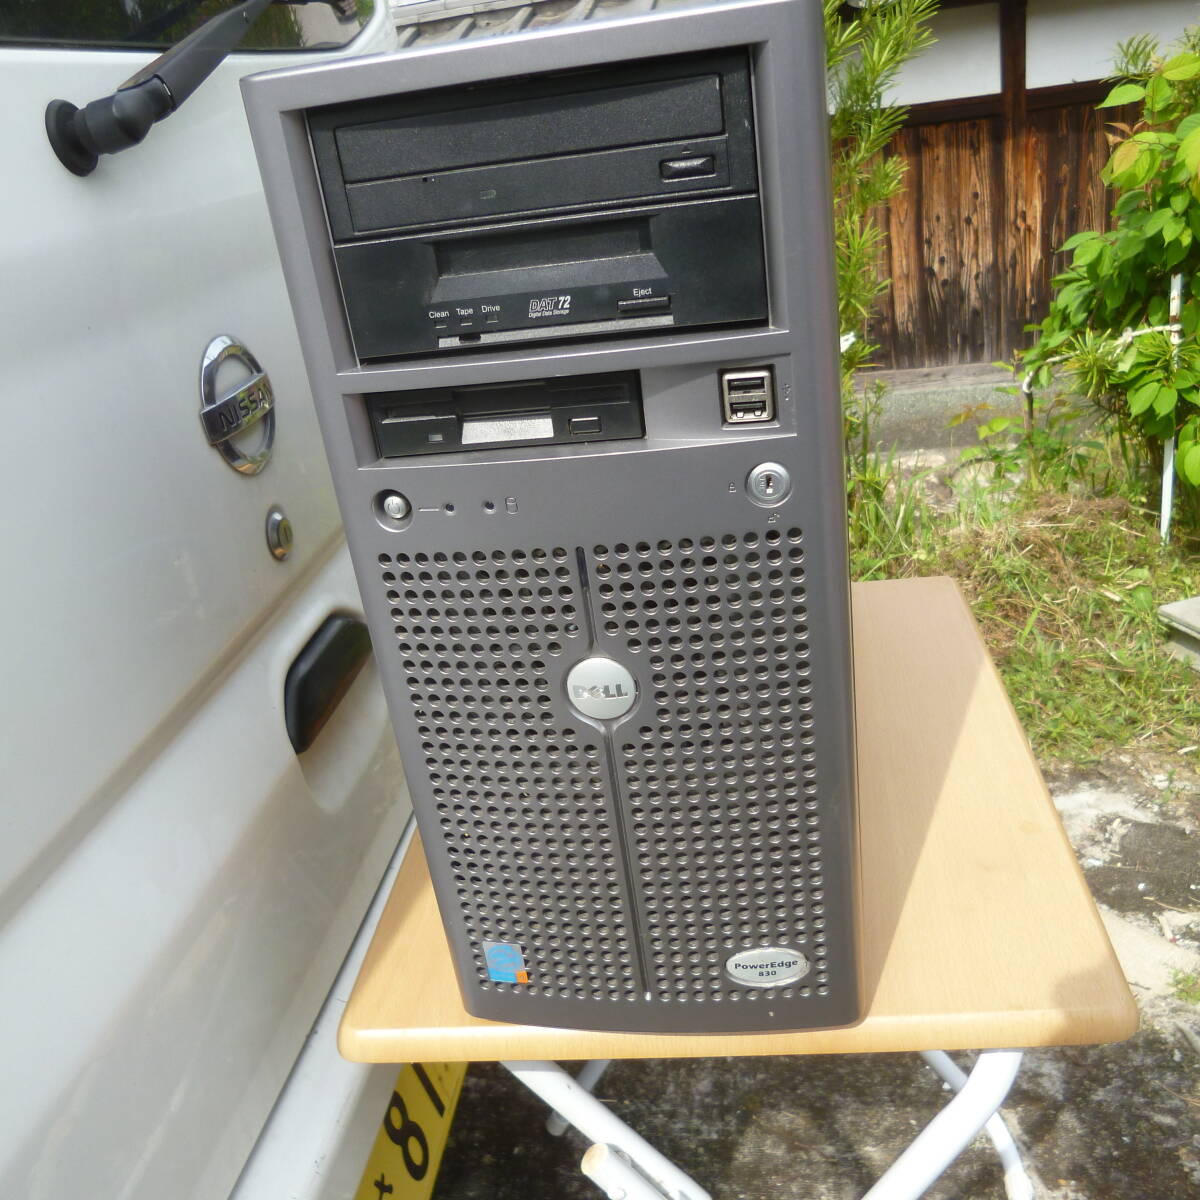 ☆ DELL PowerEdge 830 Pentium4-3.0GHz 1GB 80GB 奈良からAA2405 _画像1